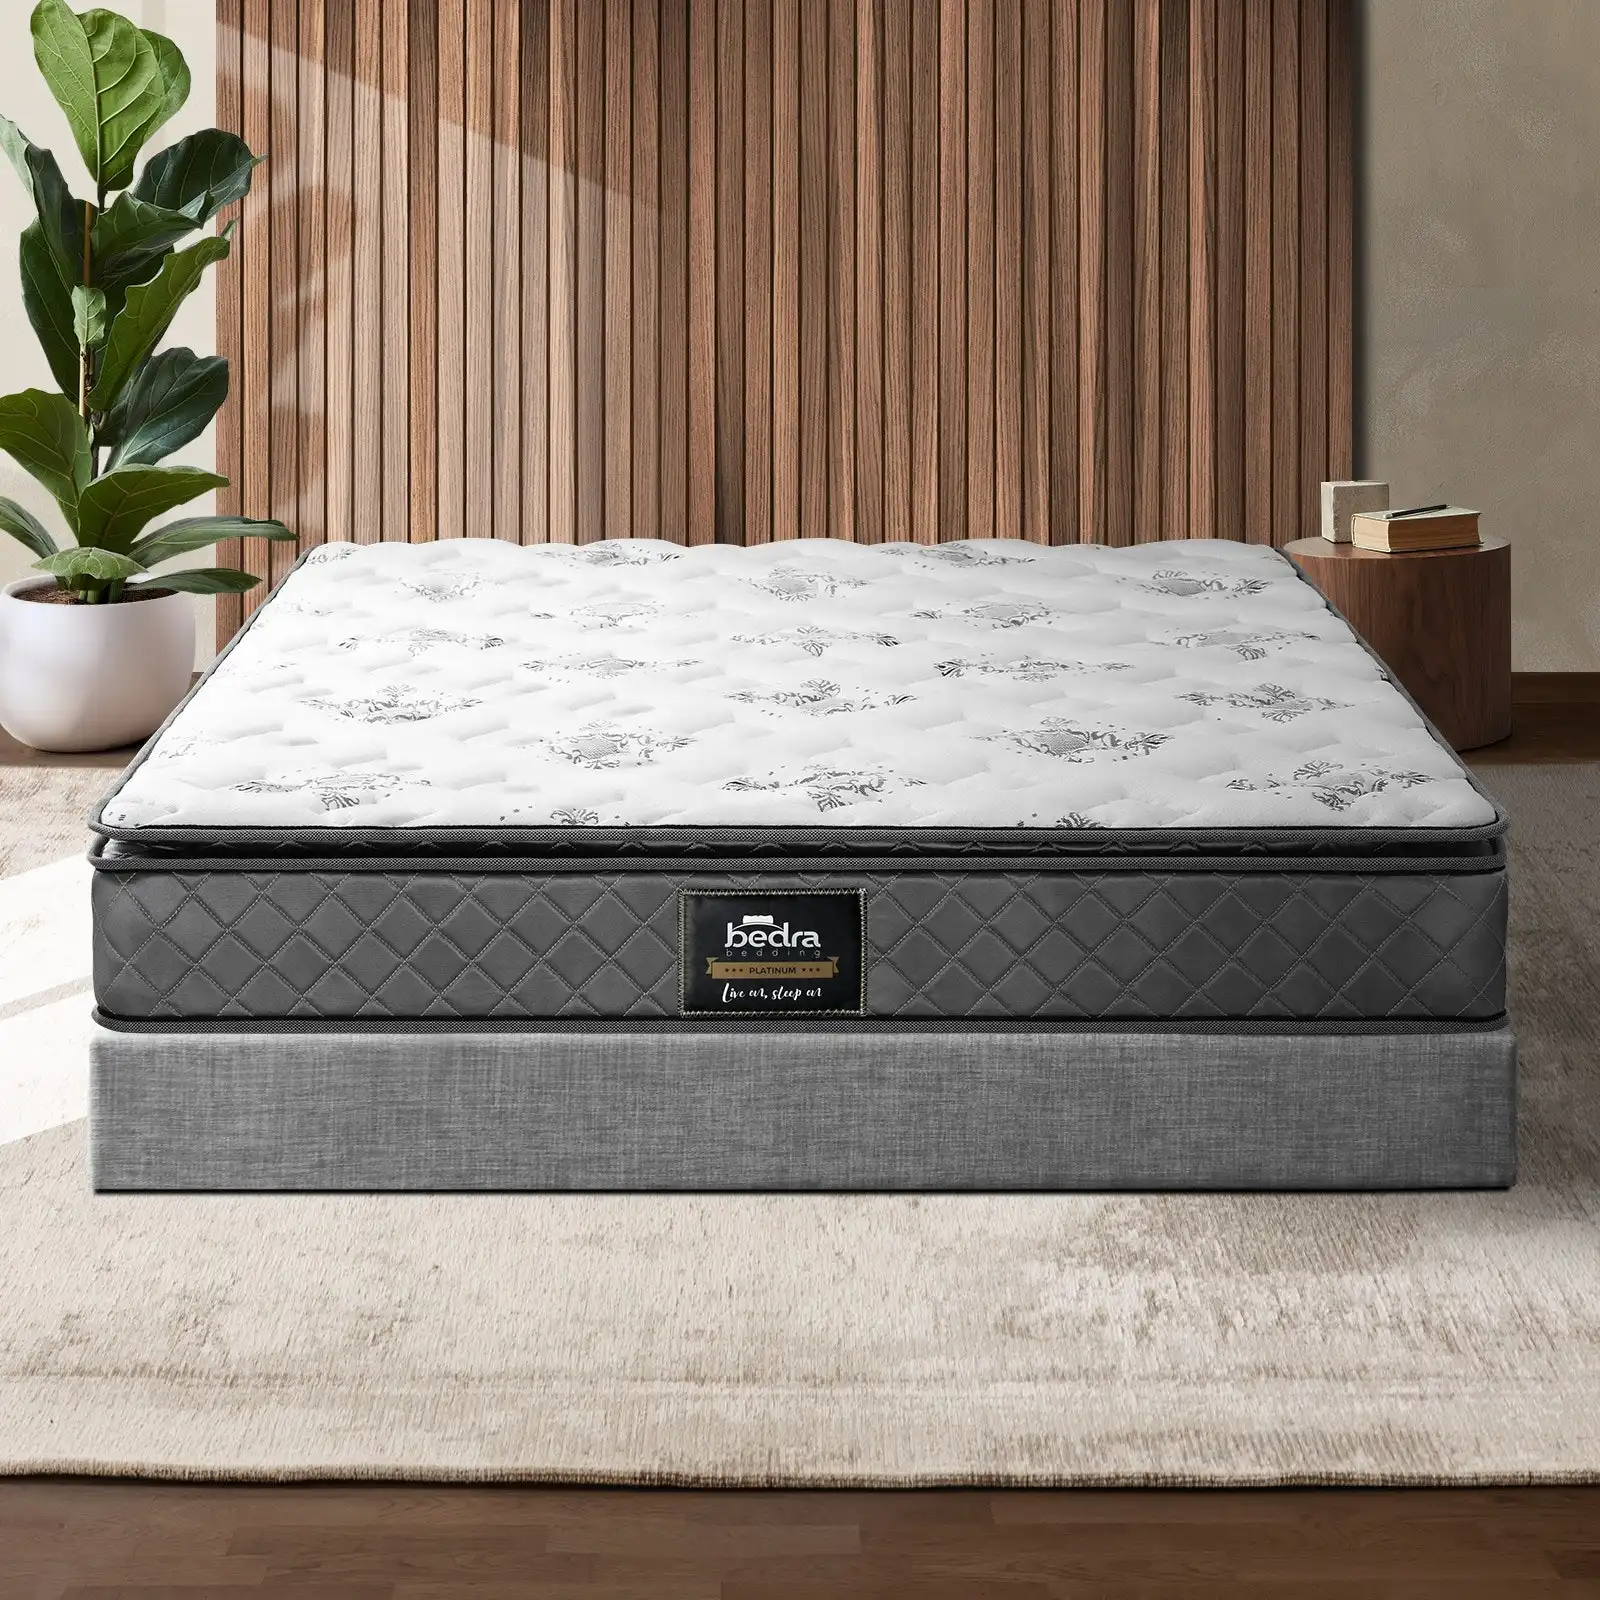 Bedra Queen Mattress Breathable Luxury Bed Bonnell Spring Foam Medium 21cm